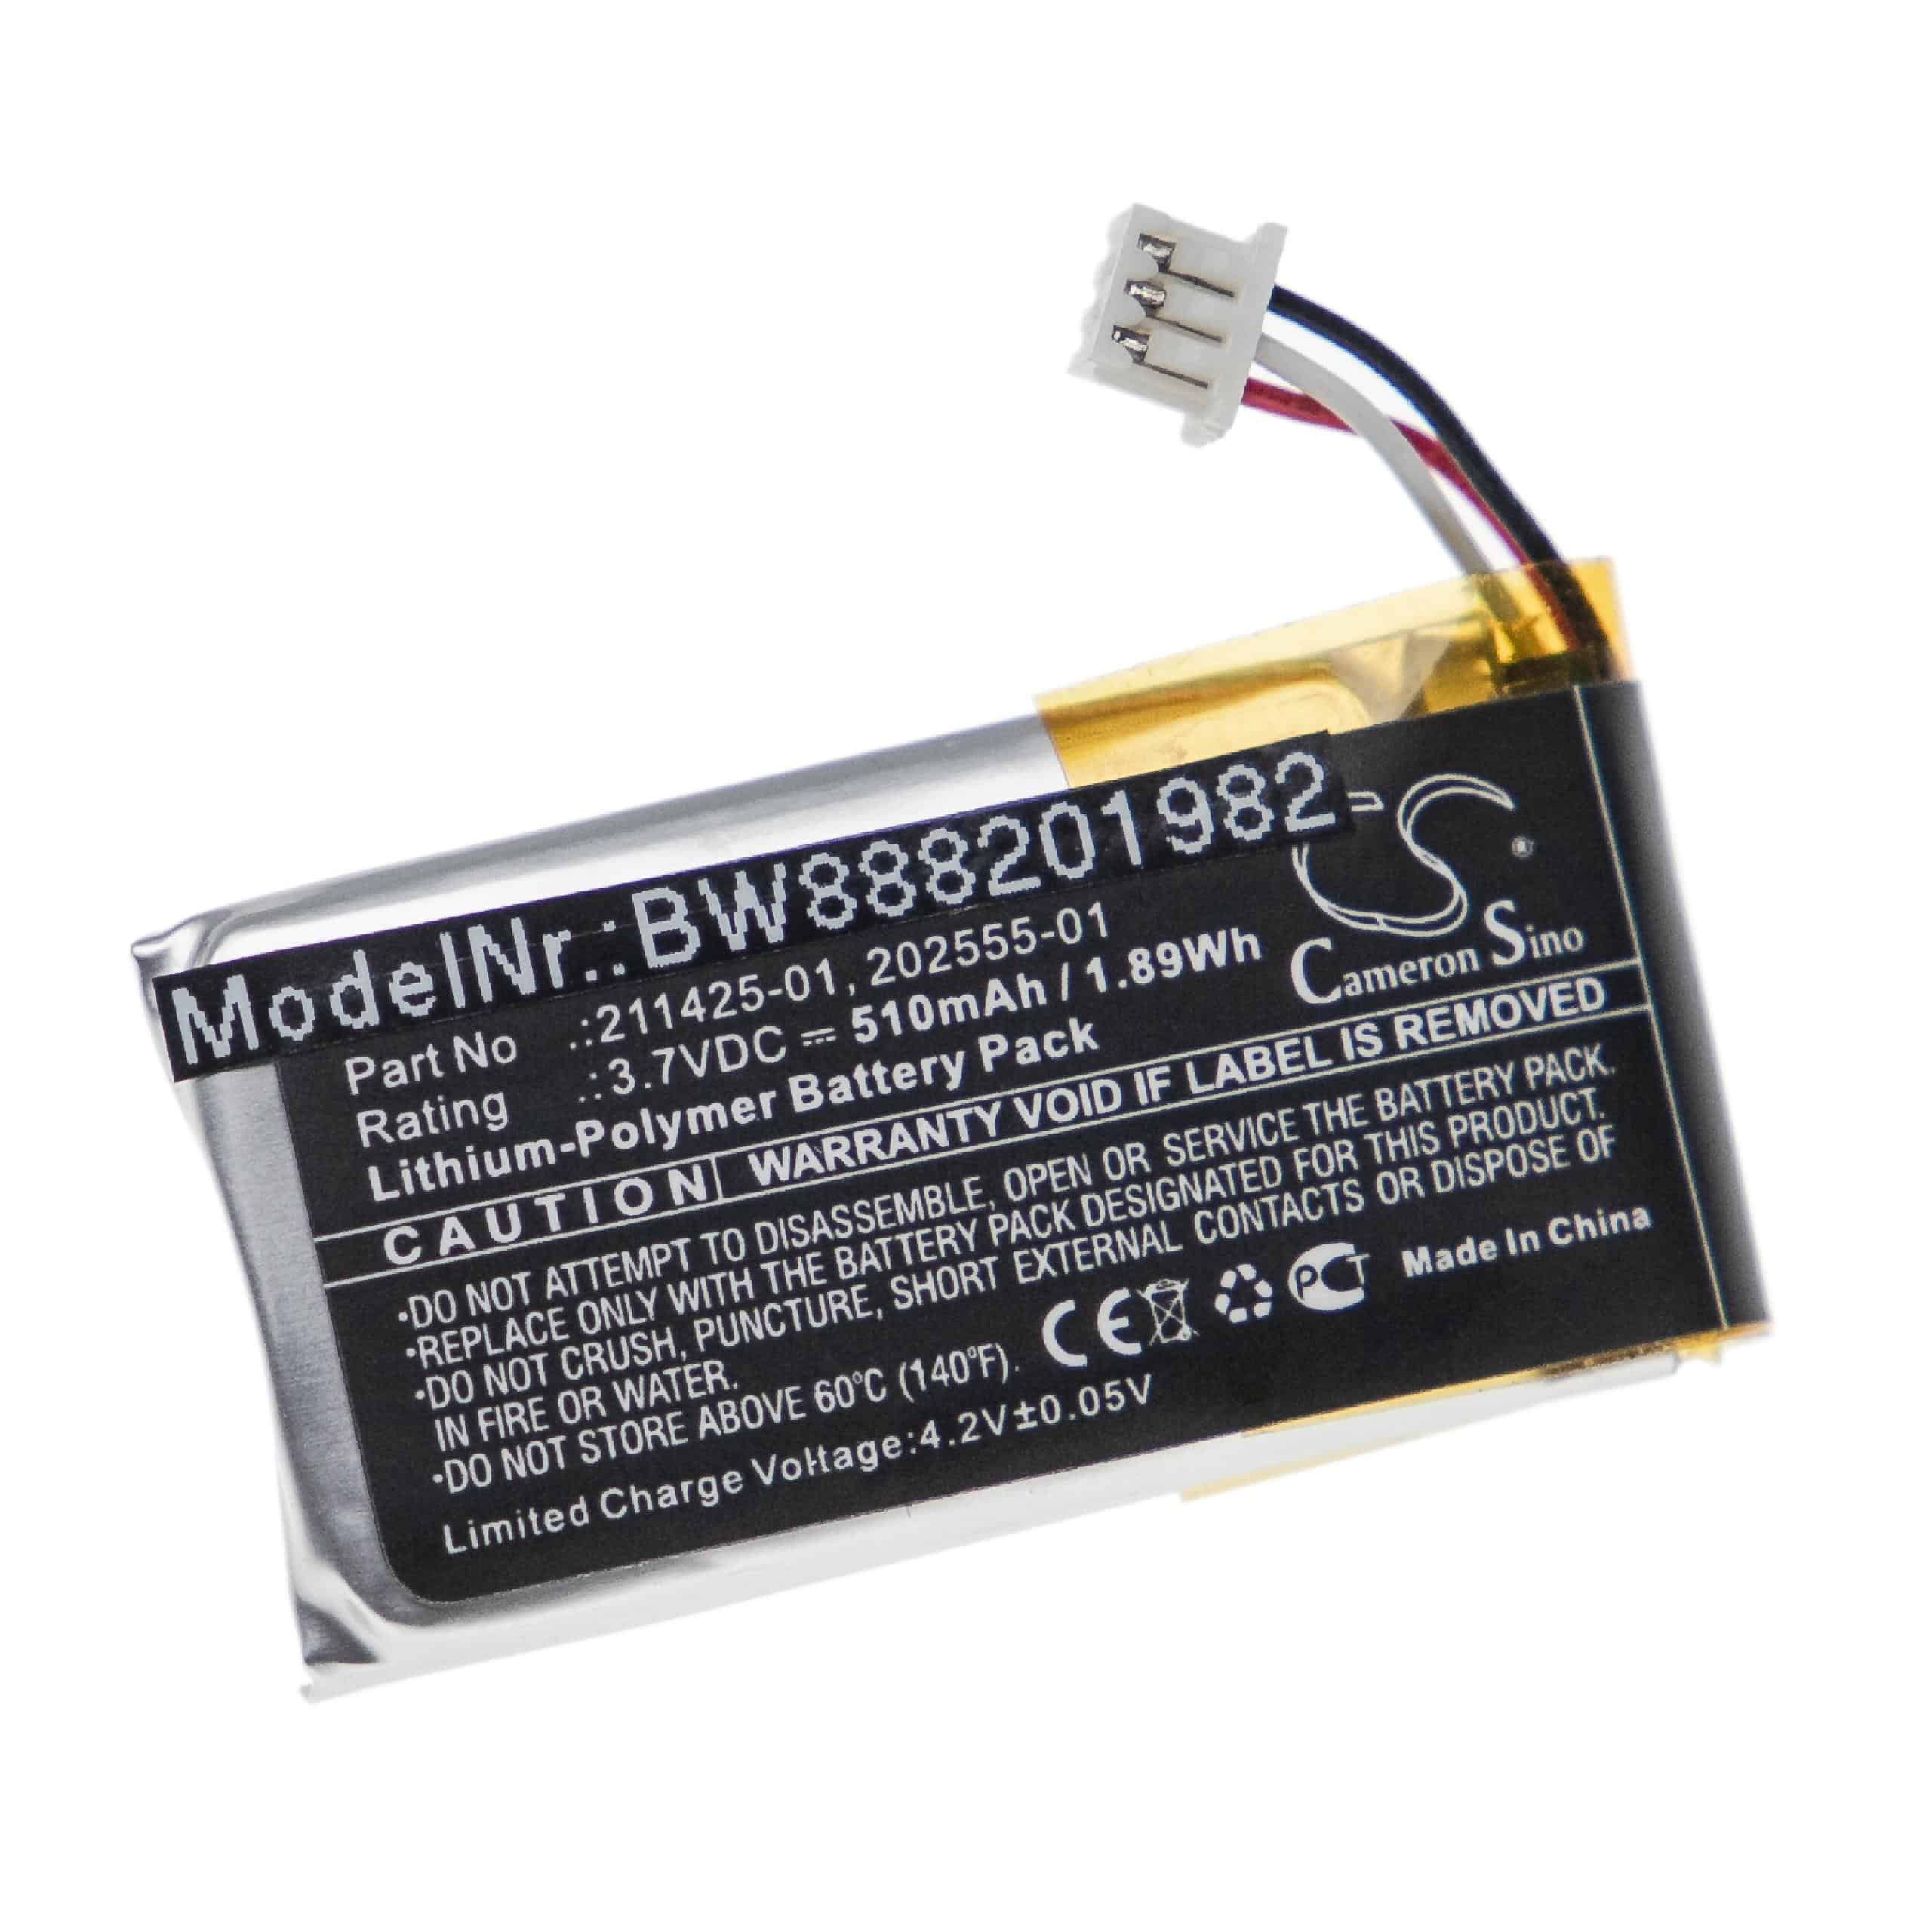 Wireless Headset Battery Replacement for Plantronics 211425-01, 202555-01 - 510mAh 3.7V Li-polymer